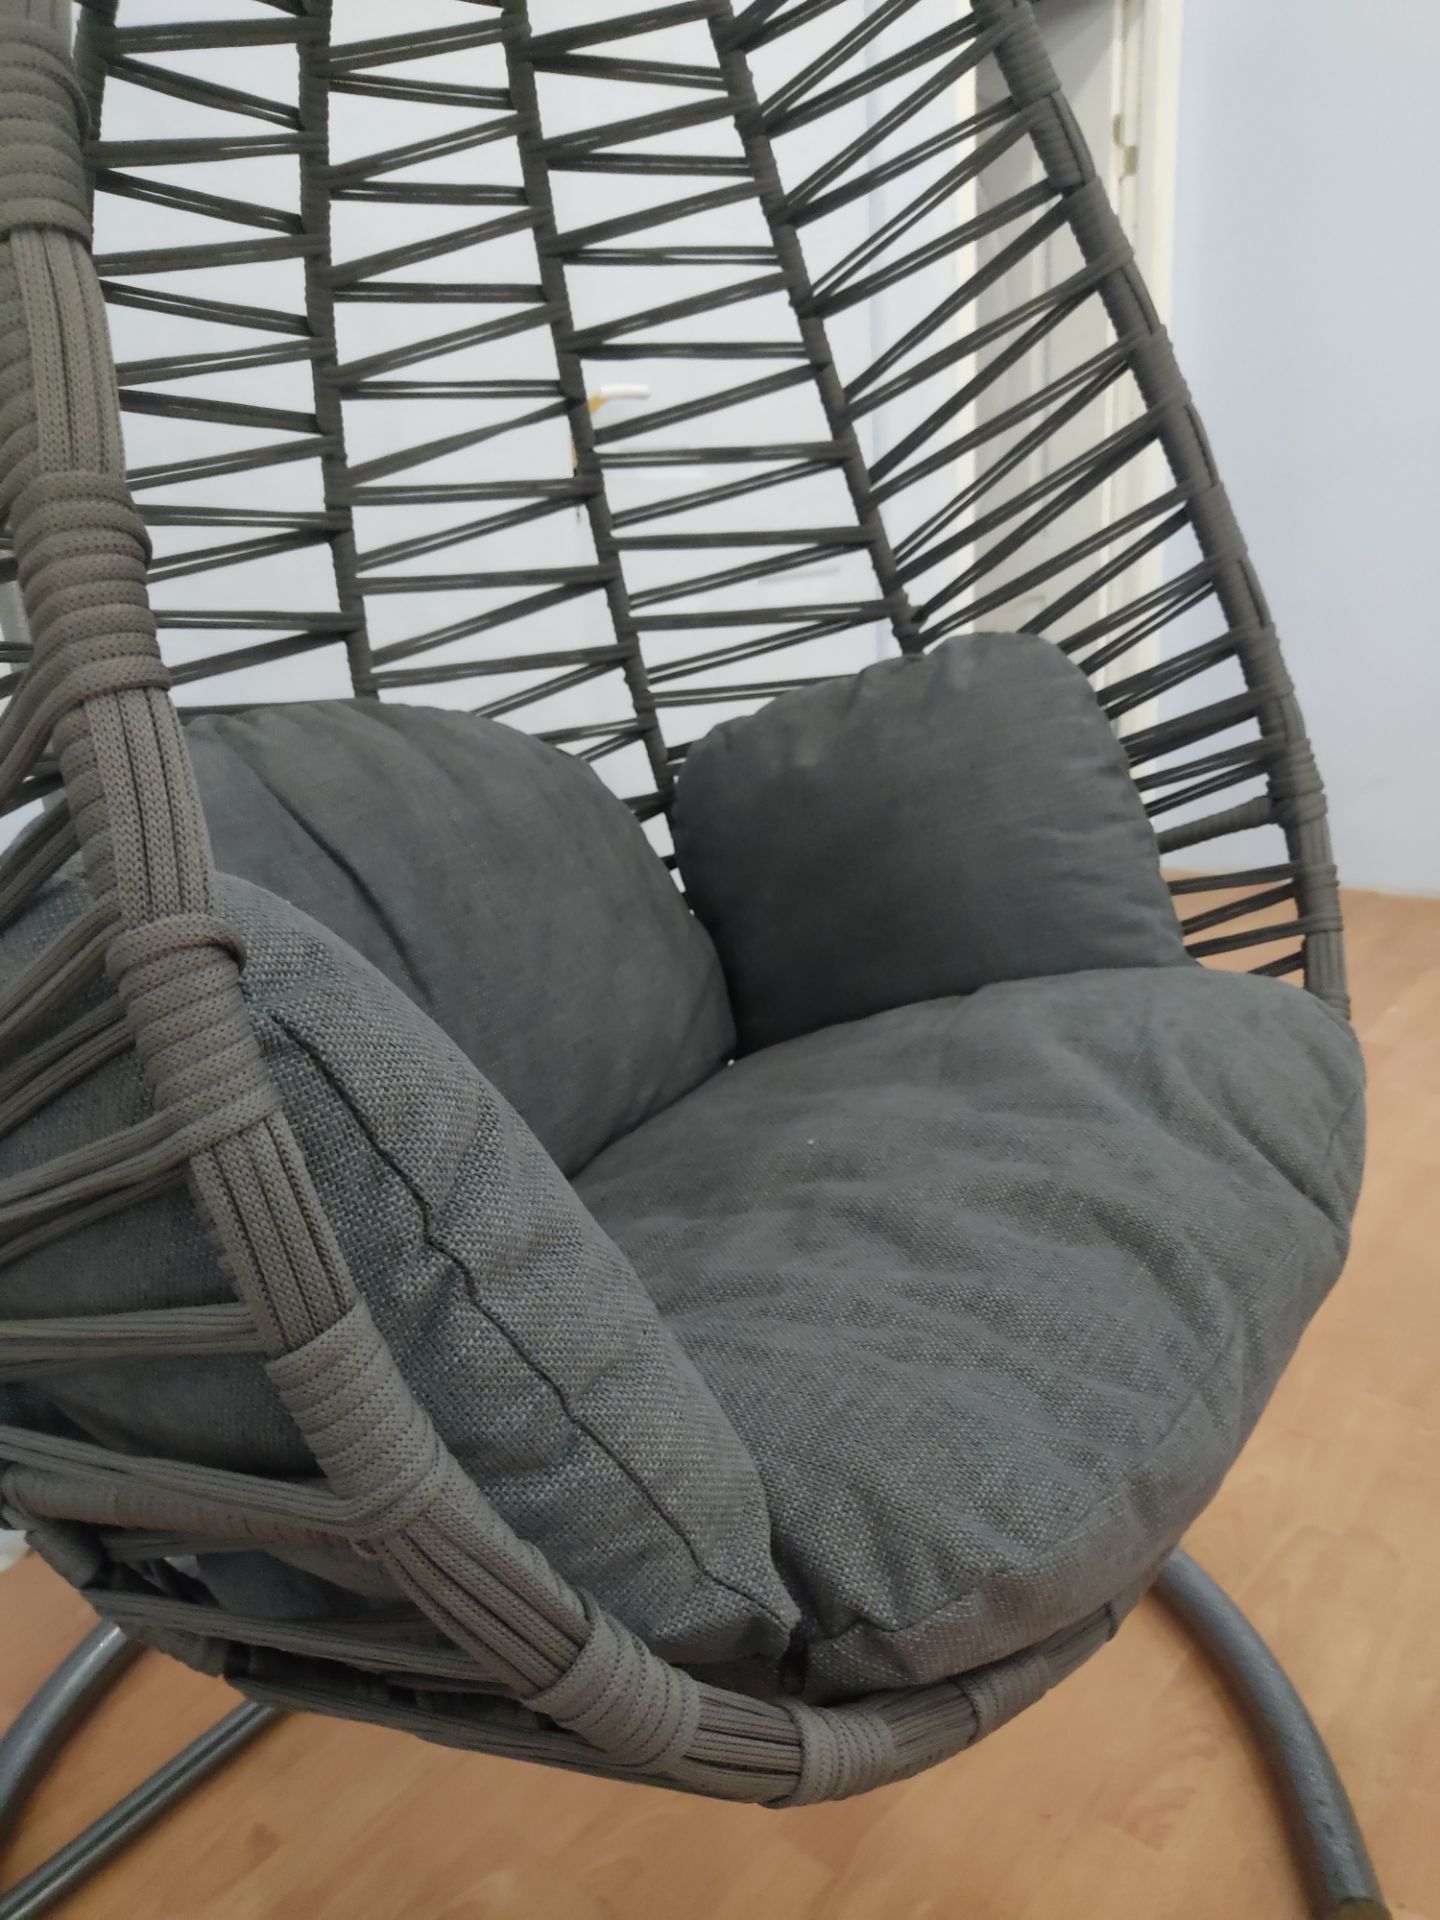 + VAT Brand New Chelsea Garden Company Adult Macrame Swing Hanging Chair - Dark Grey - Item Is - Image 3 of 3